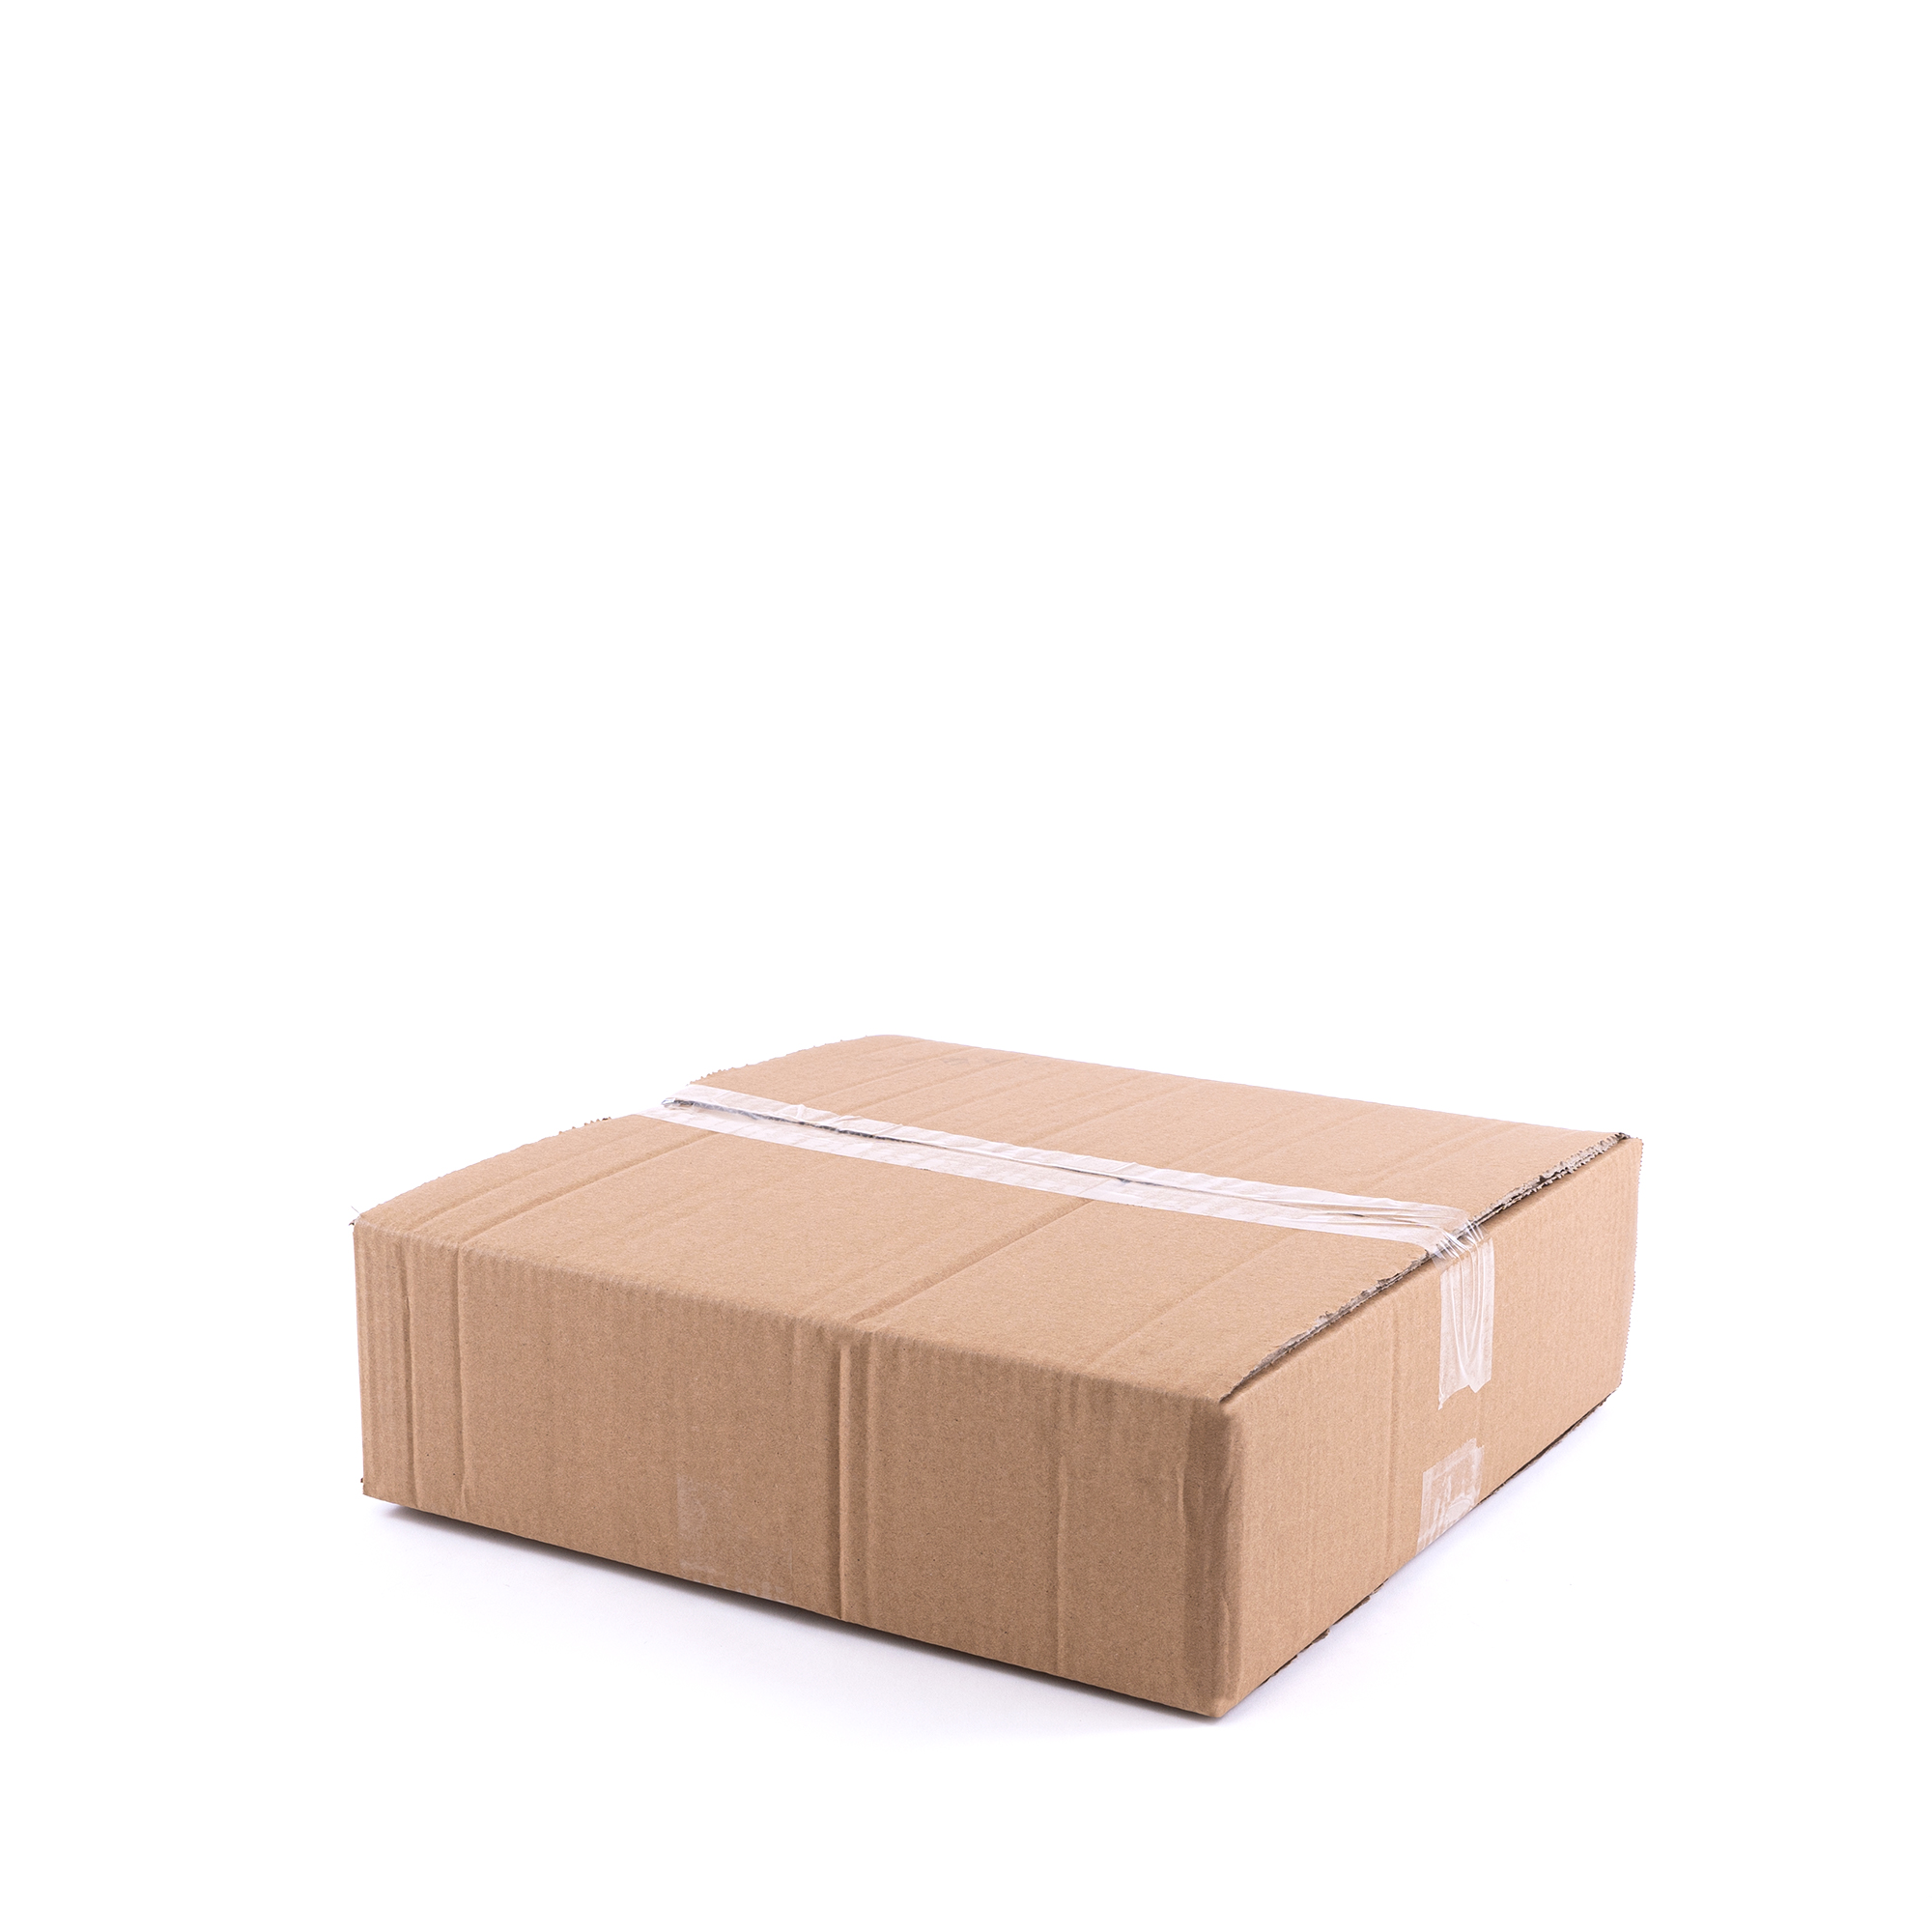 5 Layer Carton 14" x 14" x 4" 10pc/pack